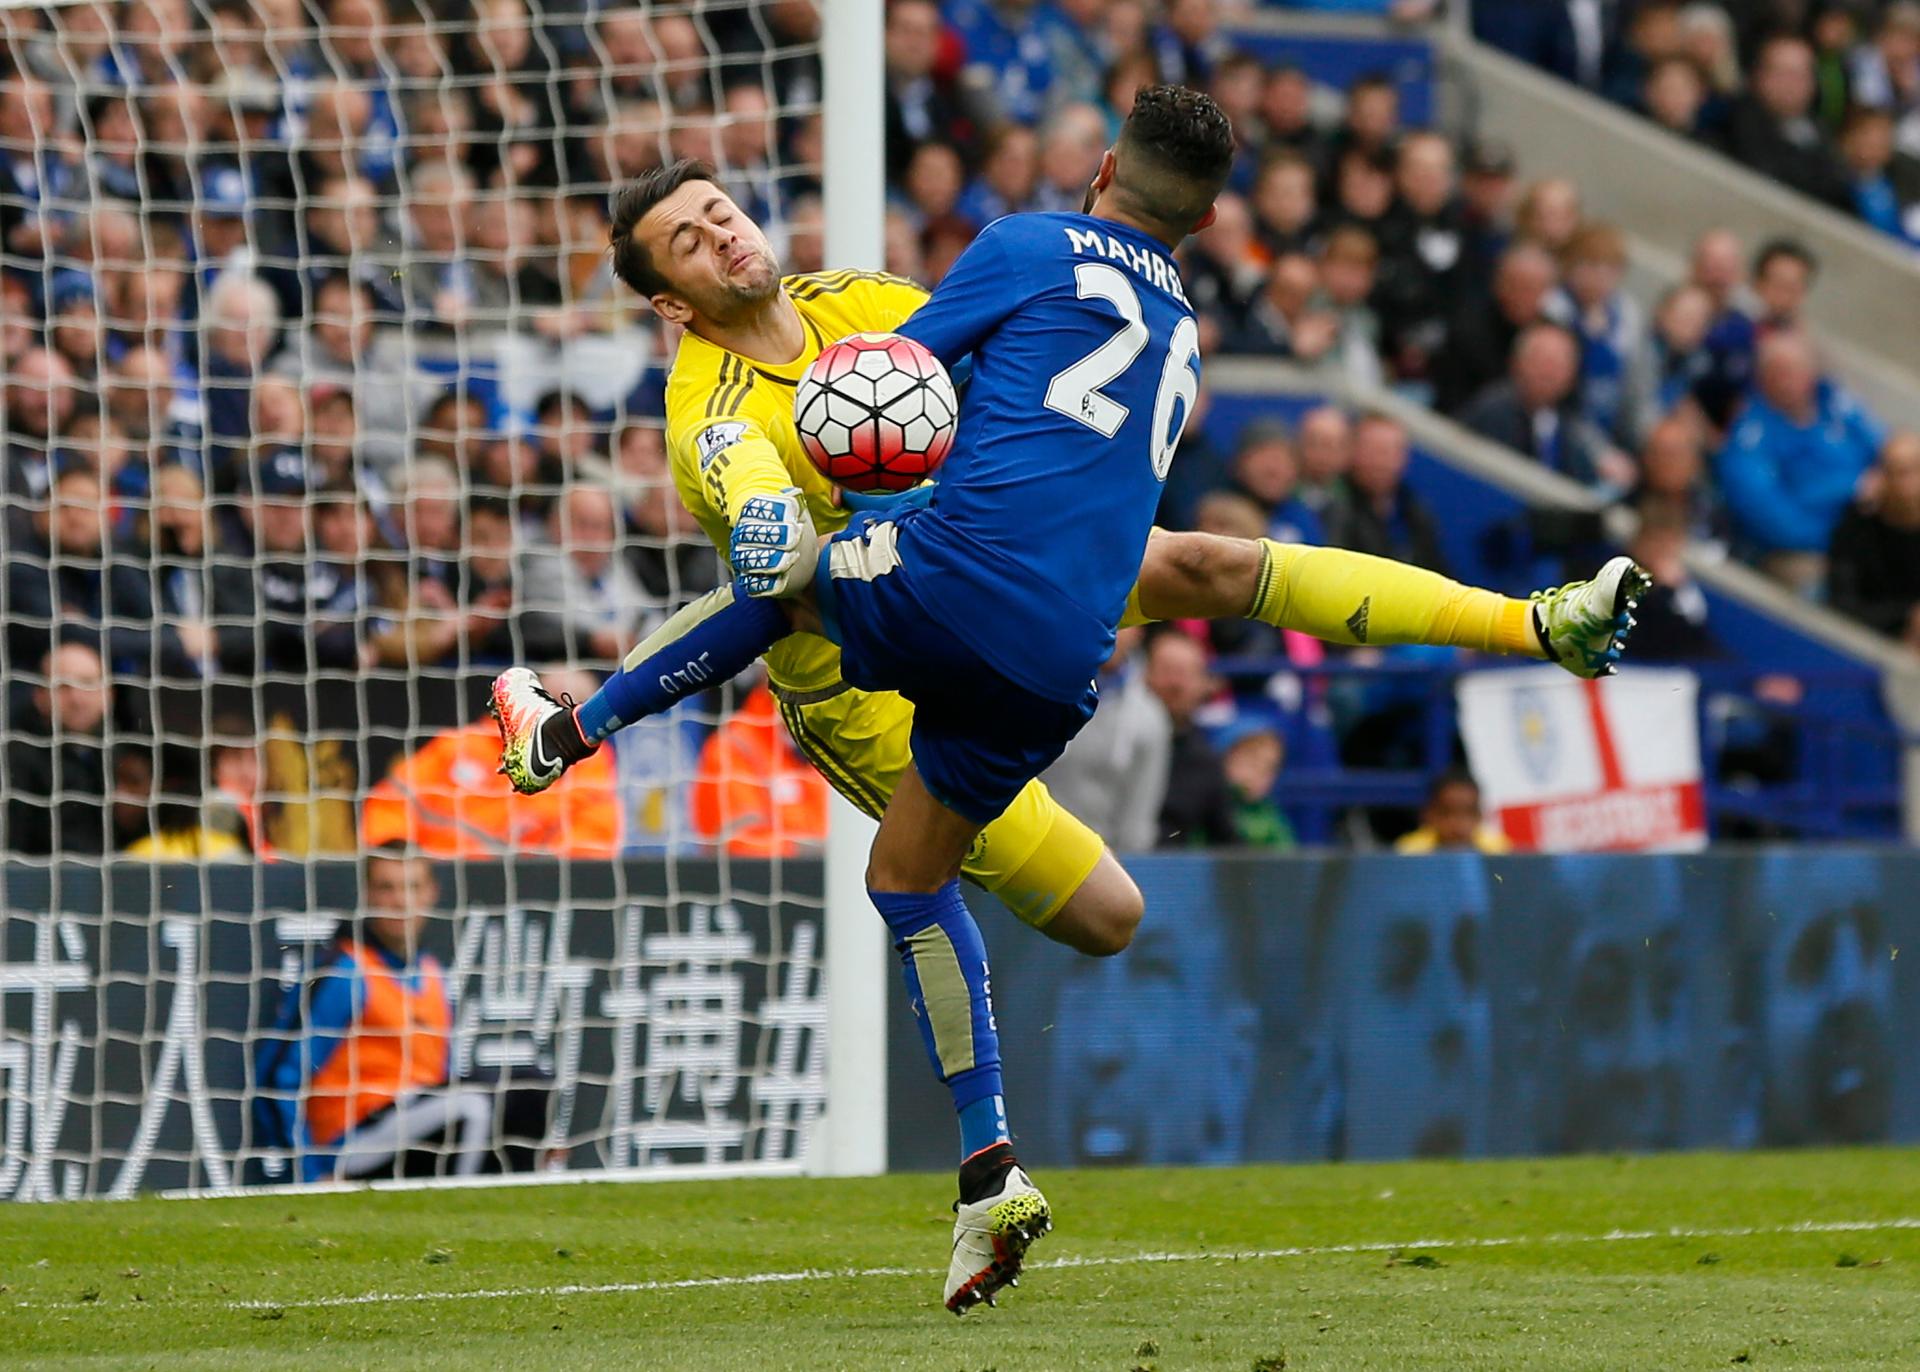 Leicester City's Riyad Mahrez crashes into Swansea's Lukasz Fabianski on the pitch.